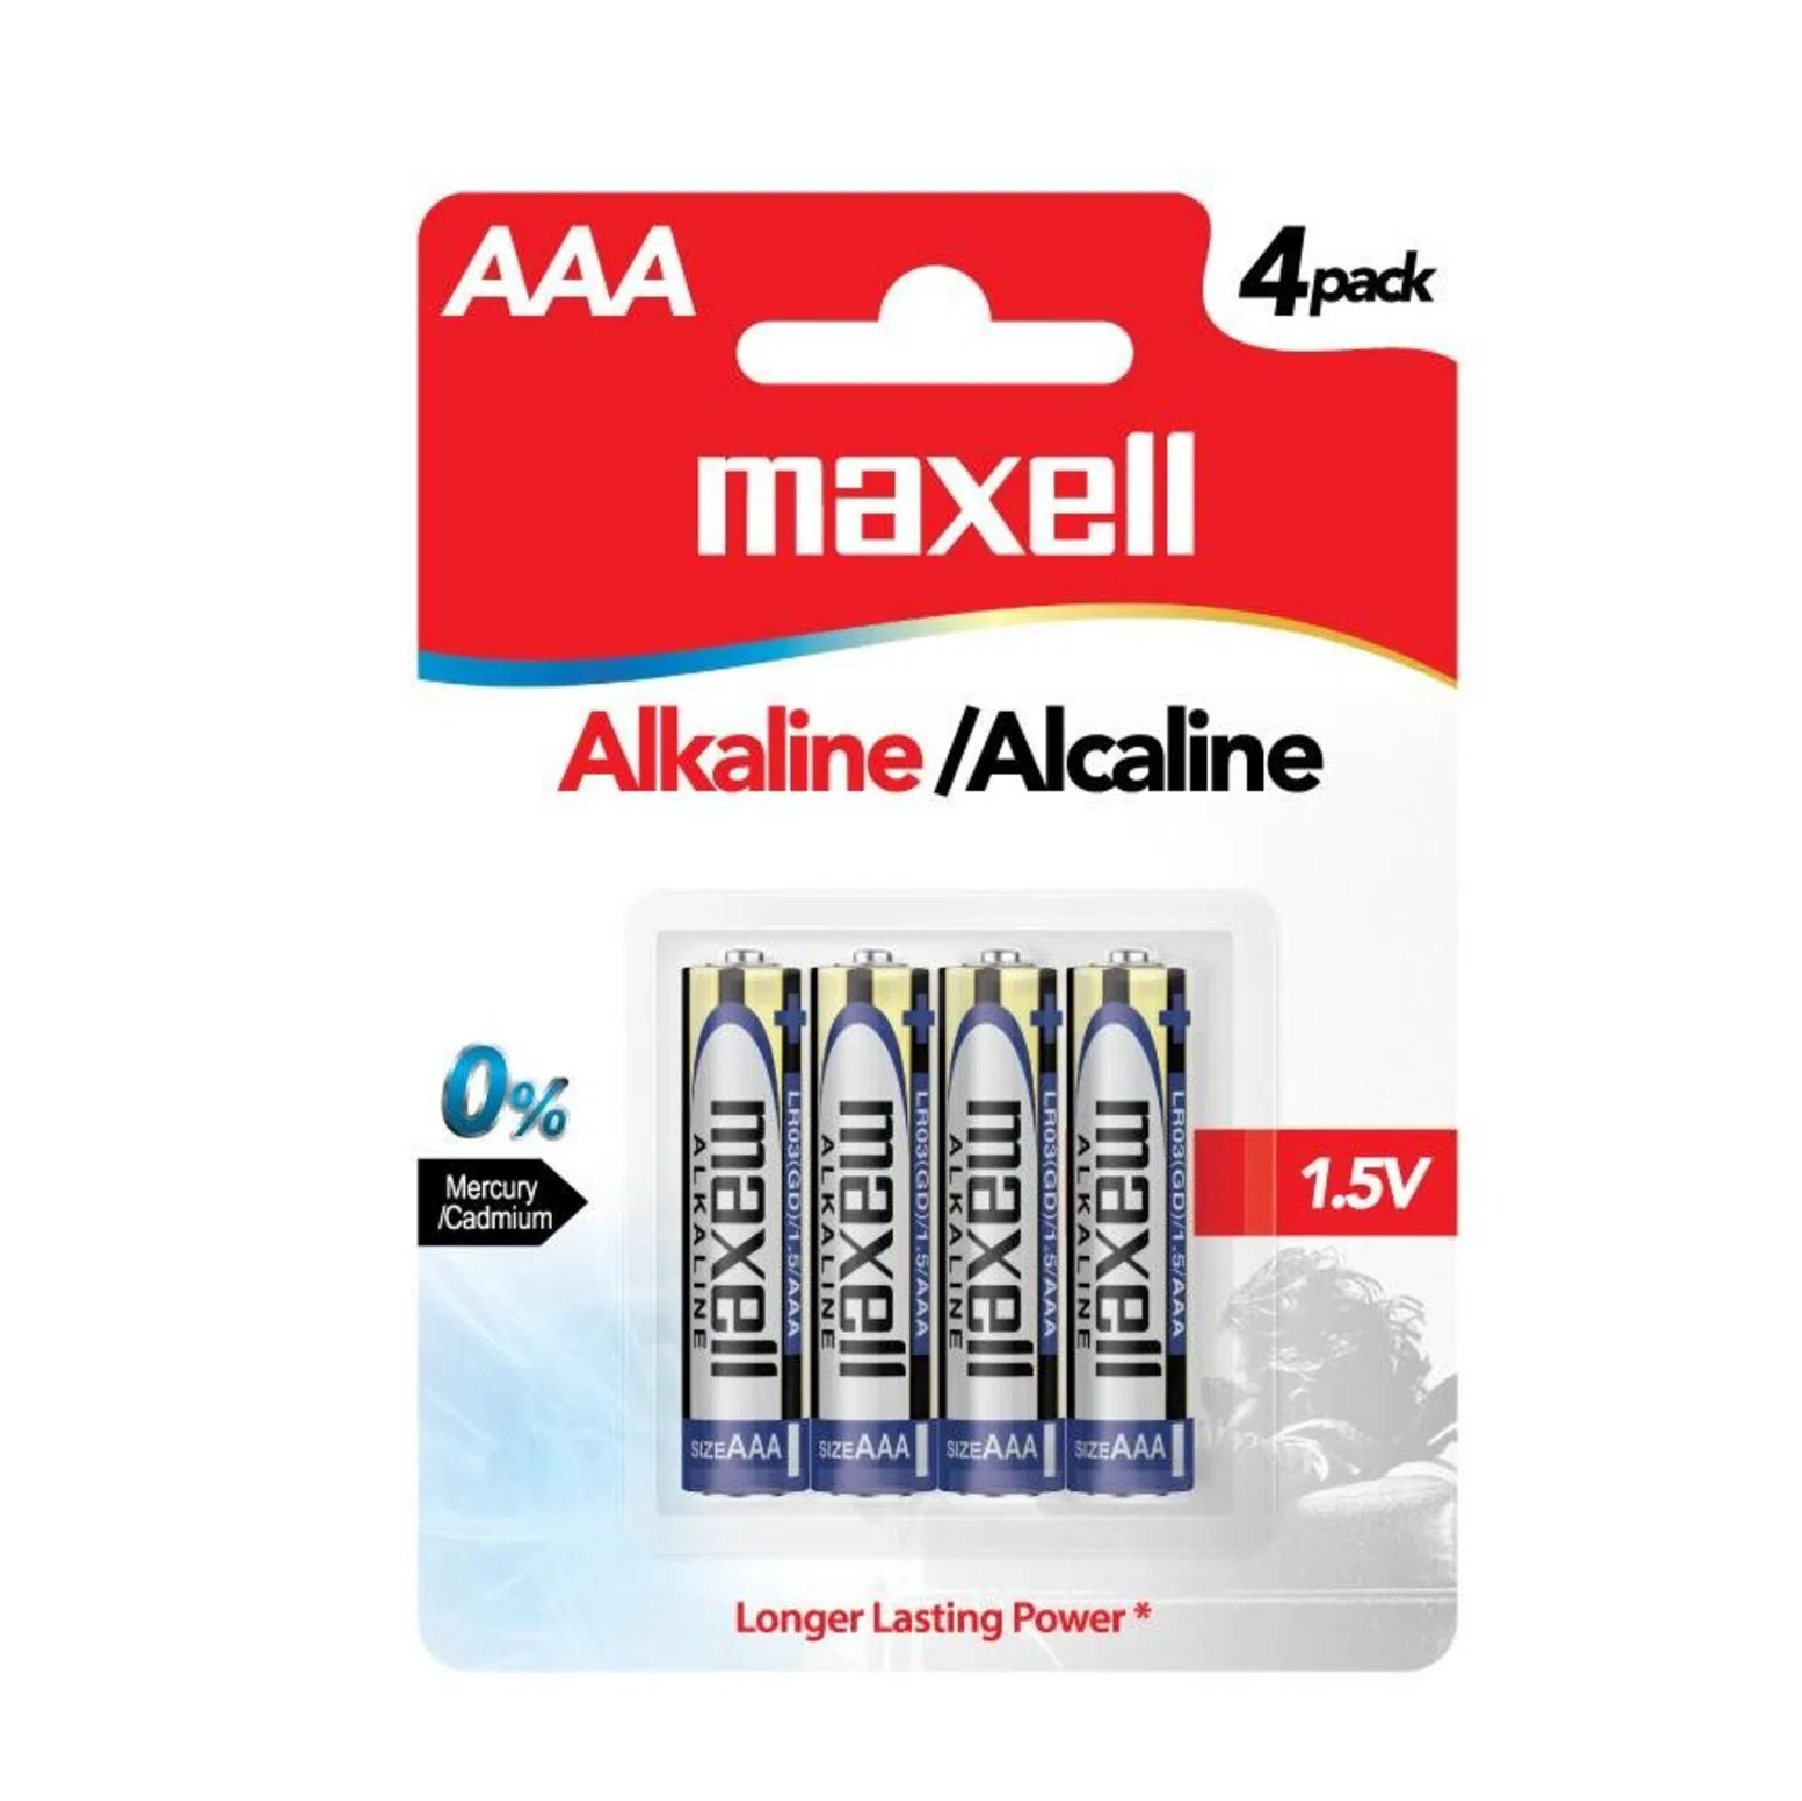 MAXELL AAA Alkaline Battery 4PC/PACK 1.5V Long Lasting